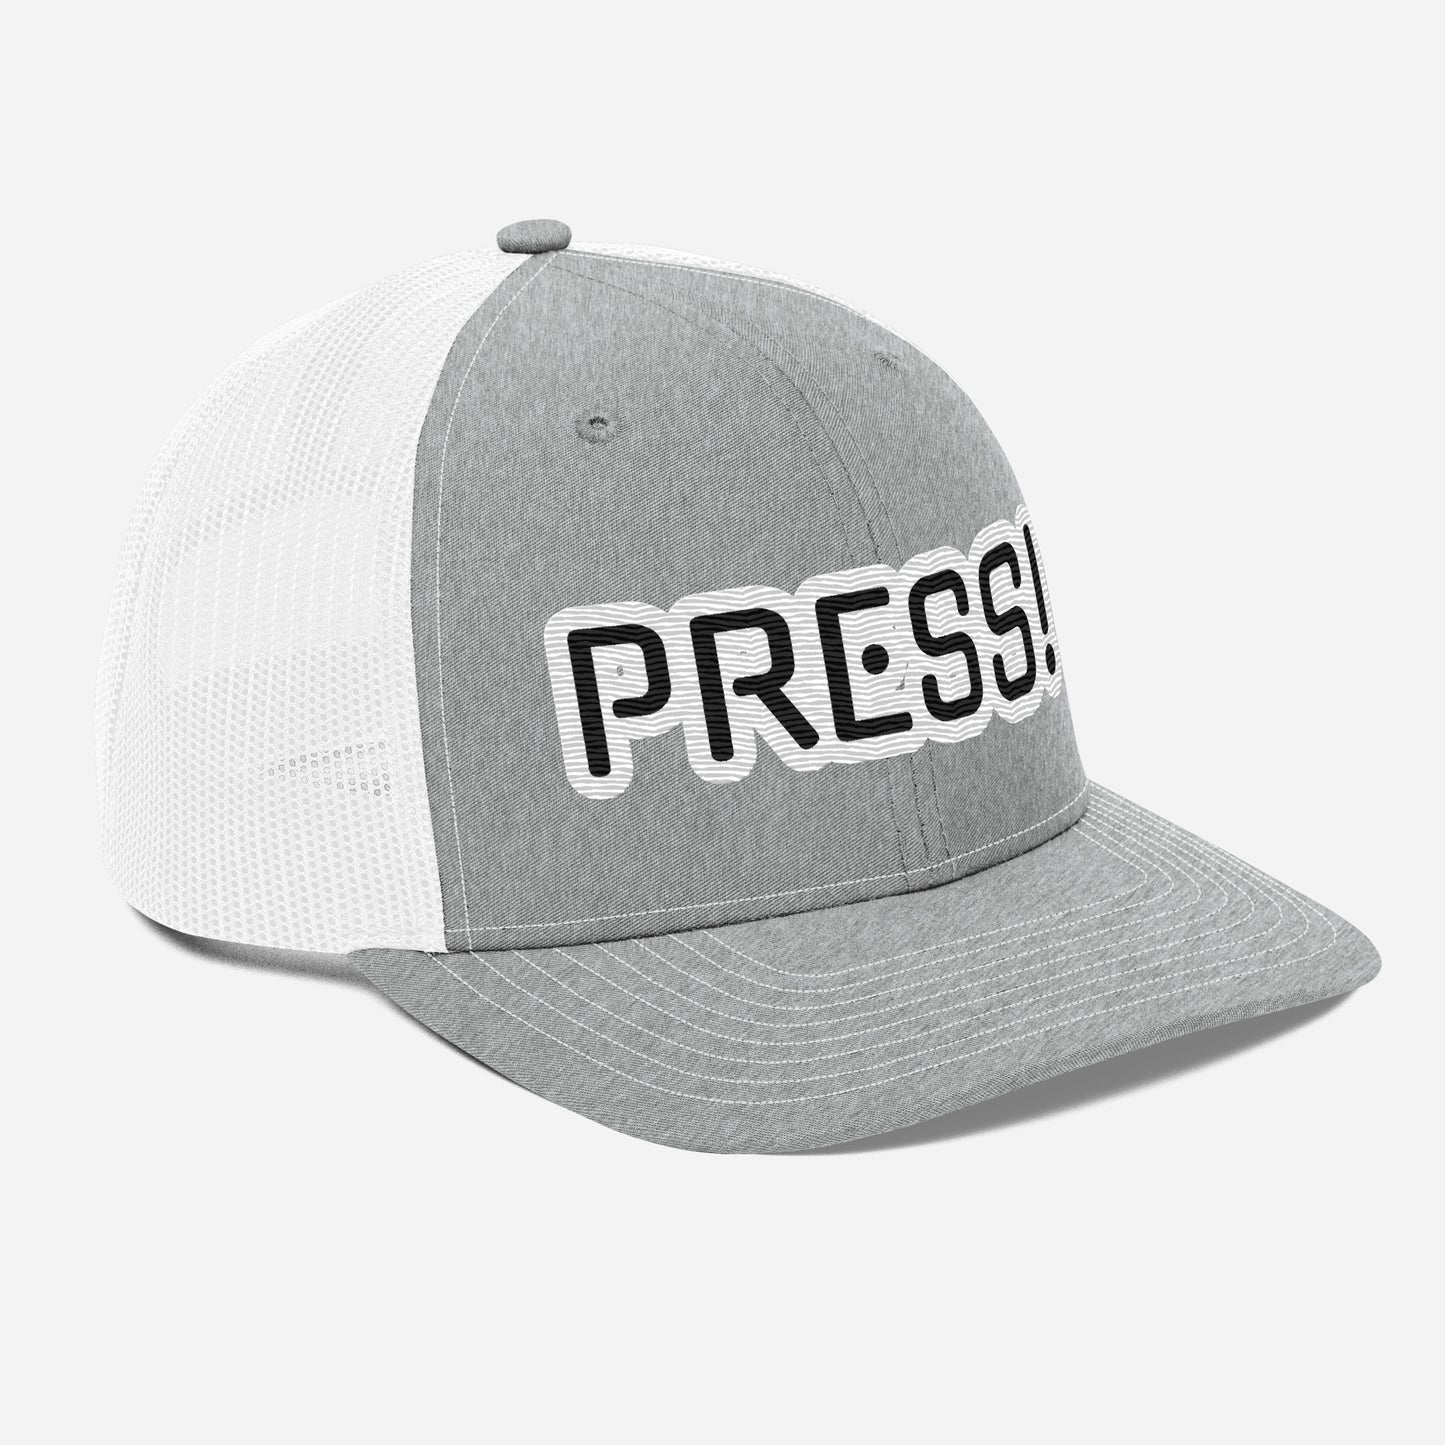 Press!- Trucker Cap